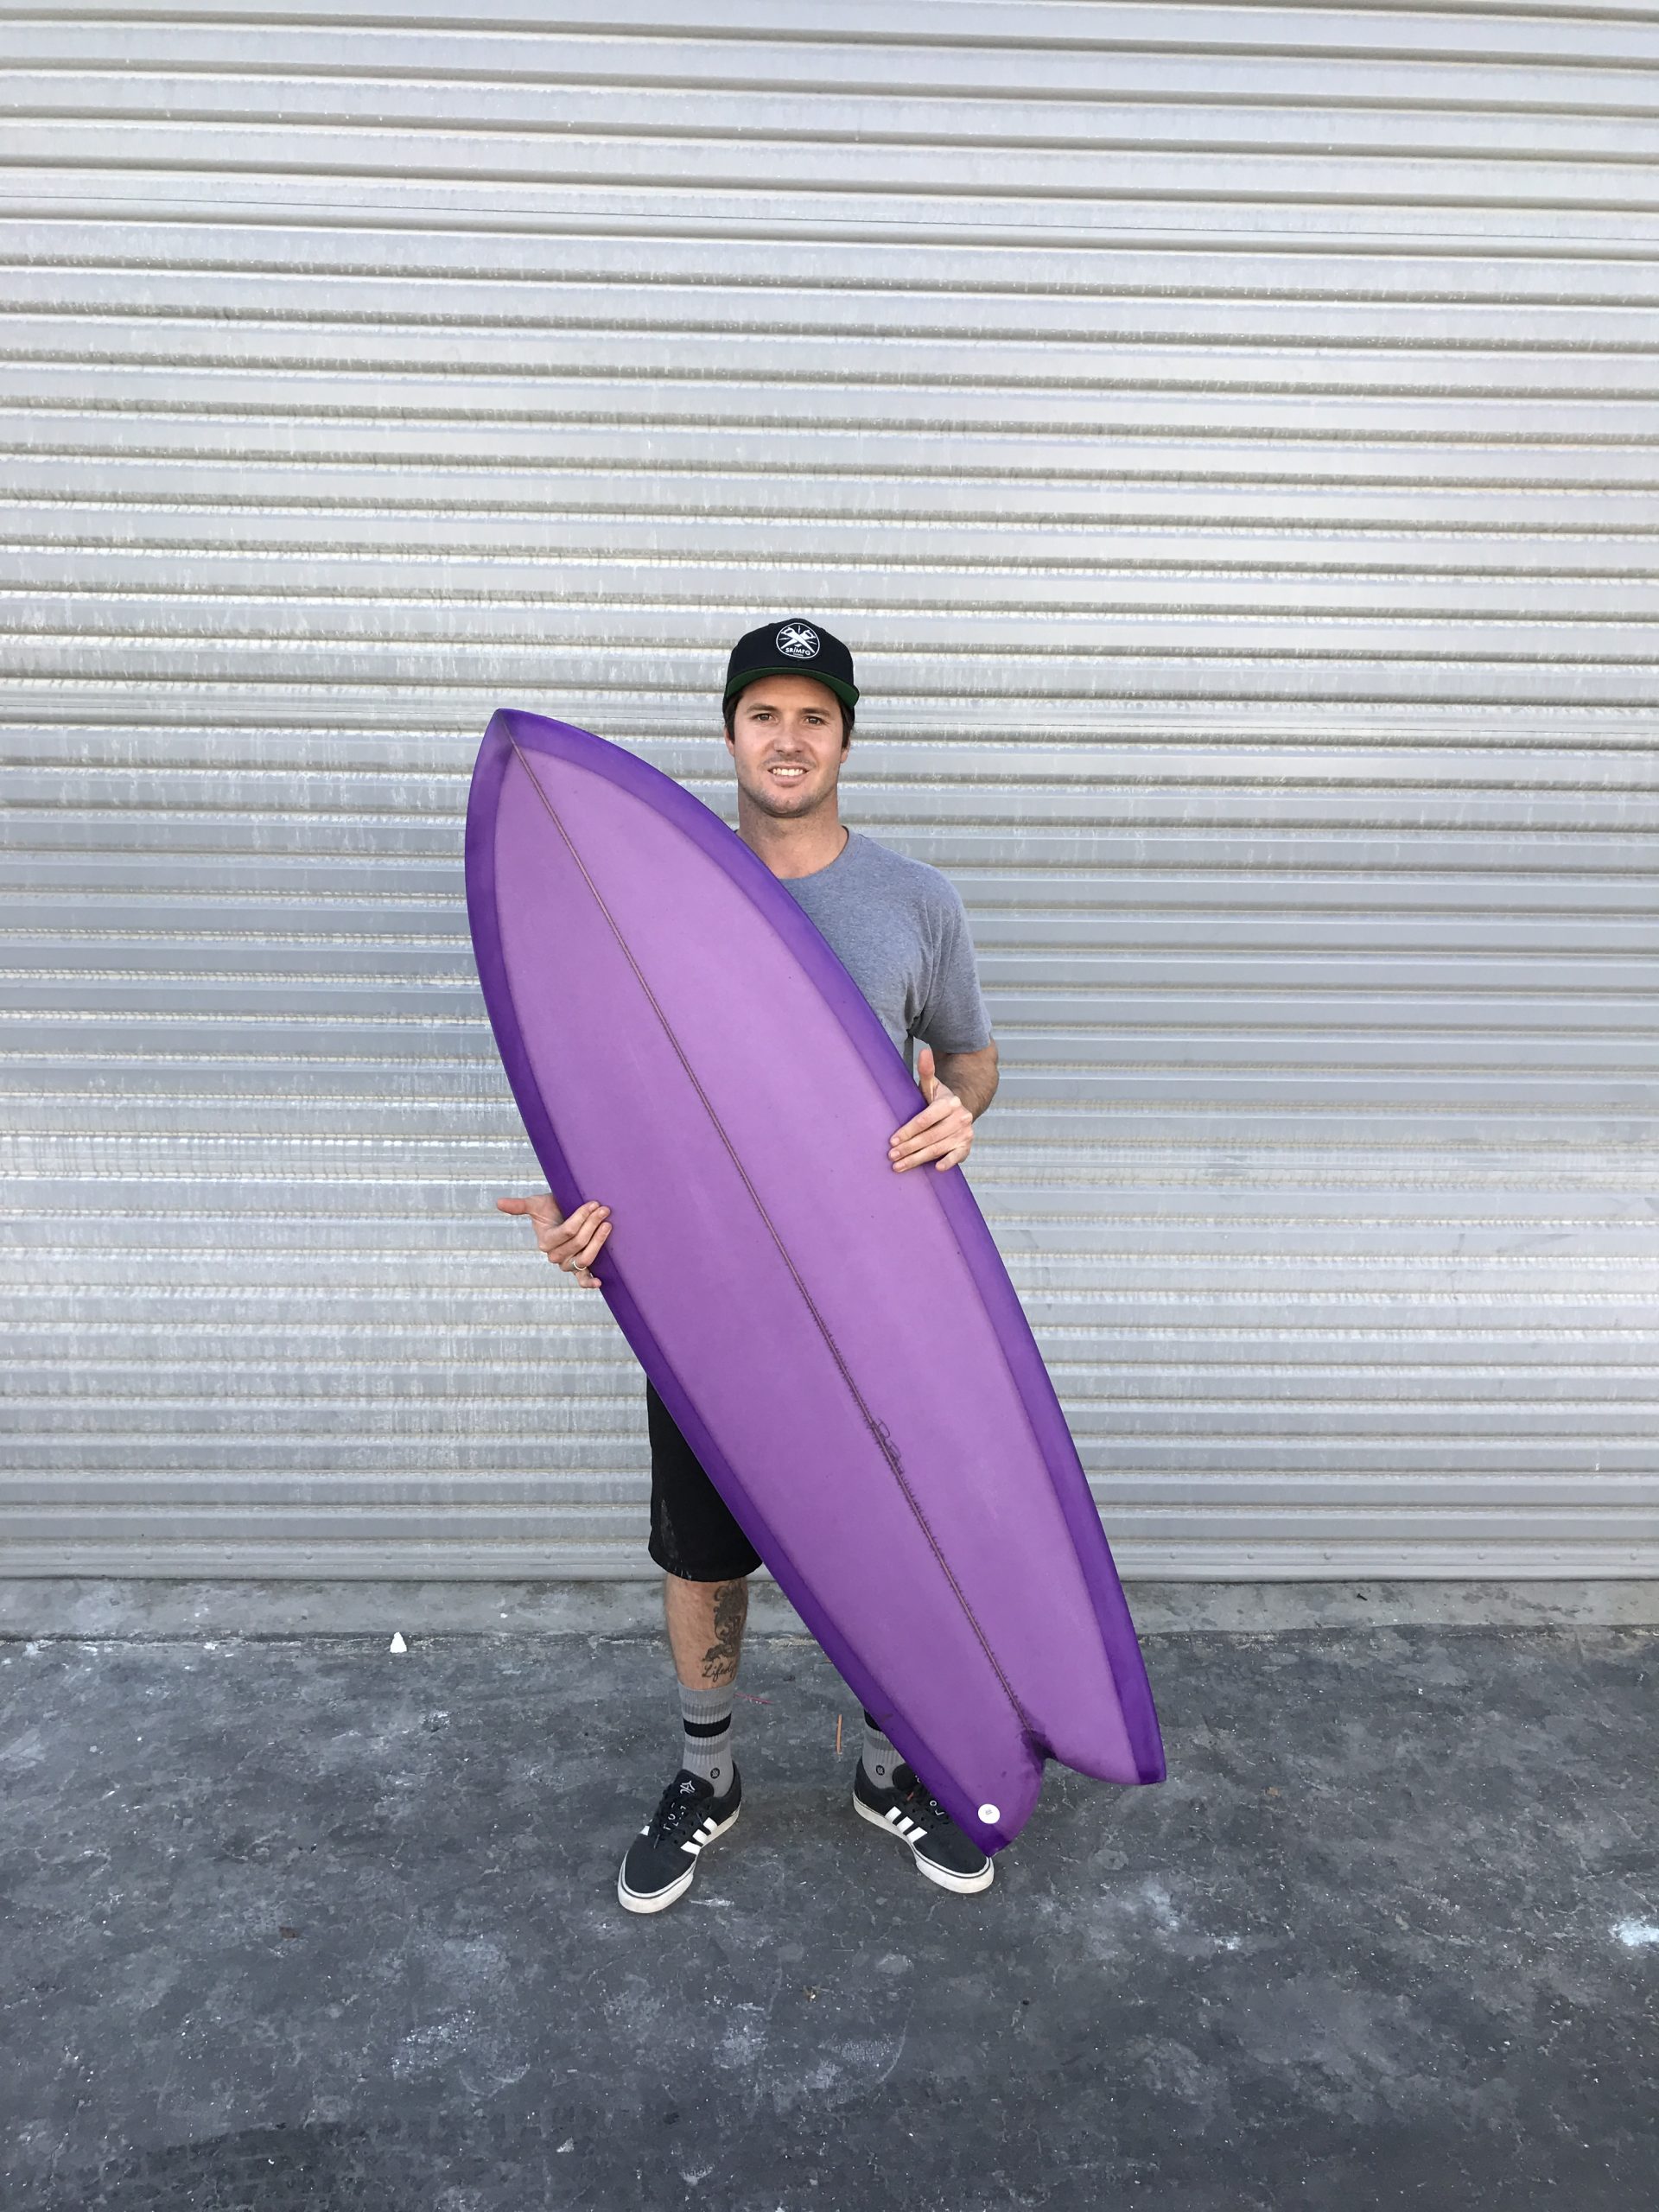 Duran Barr Local Surf Pro